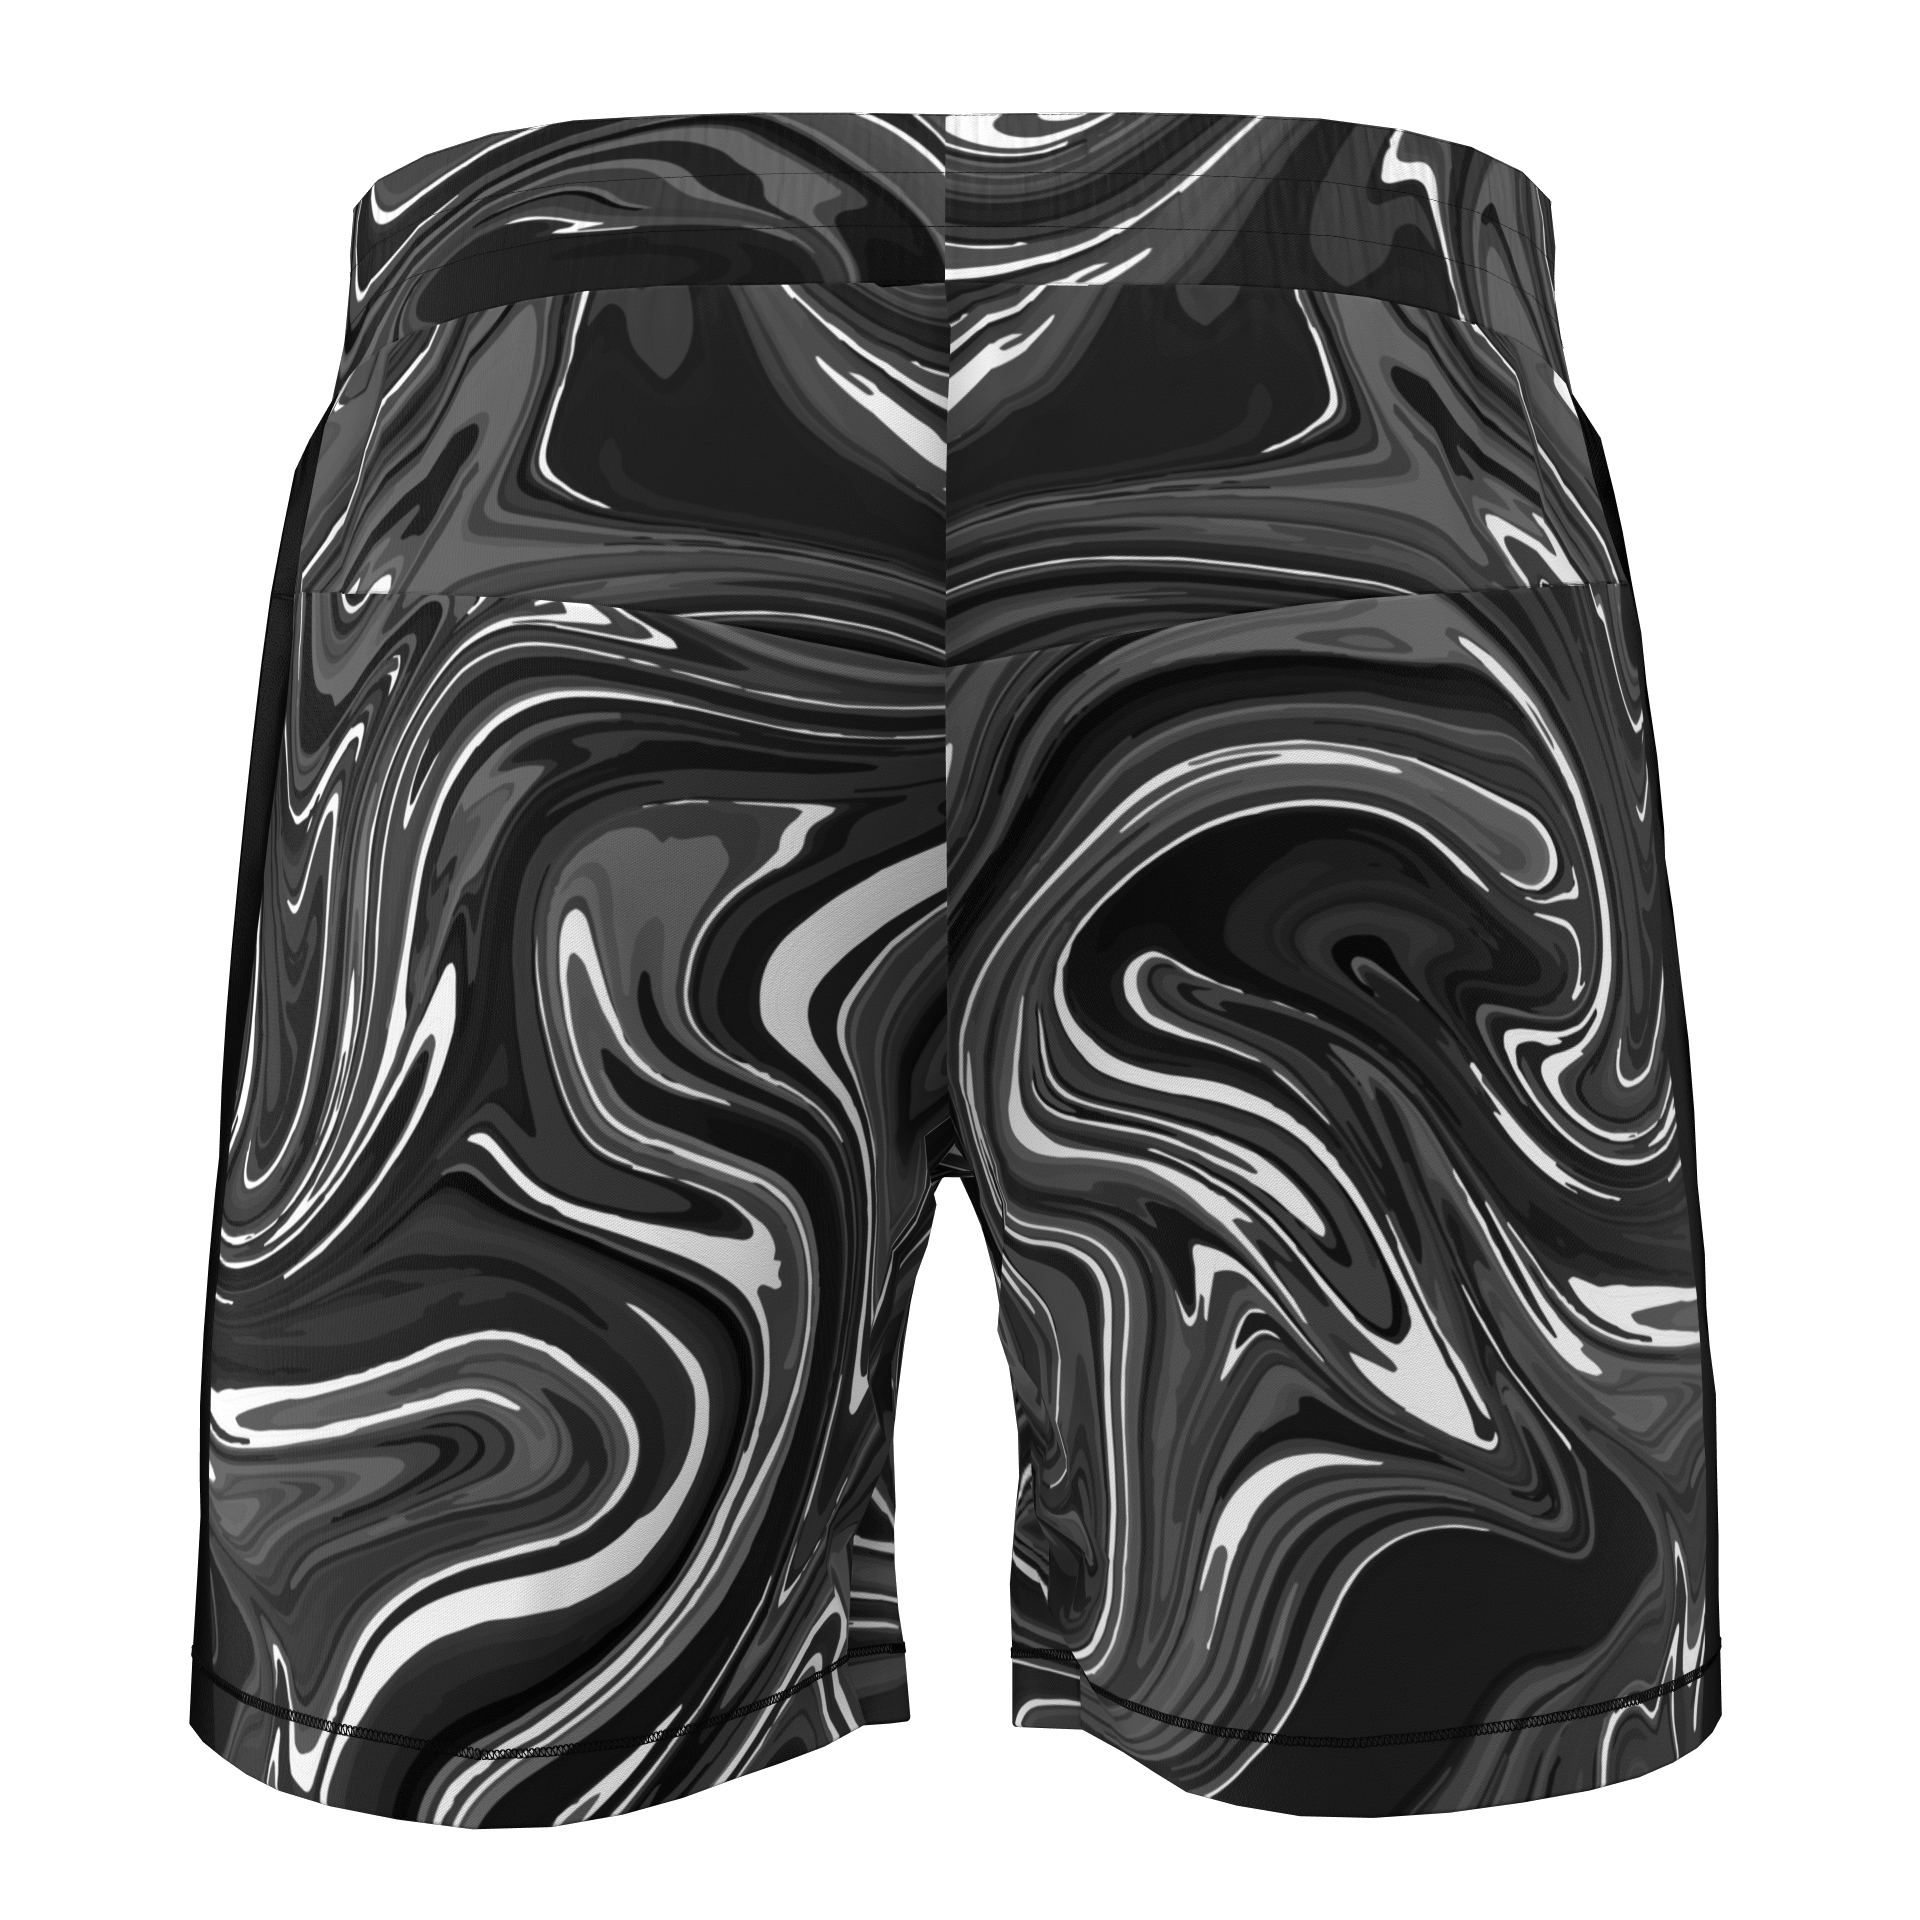 Trippy Marble BJJ Shorts